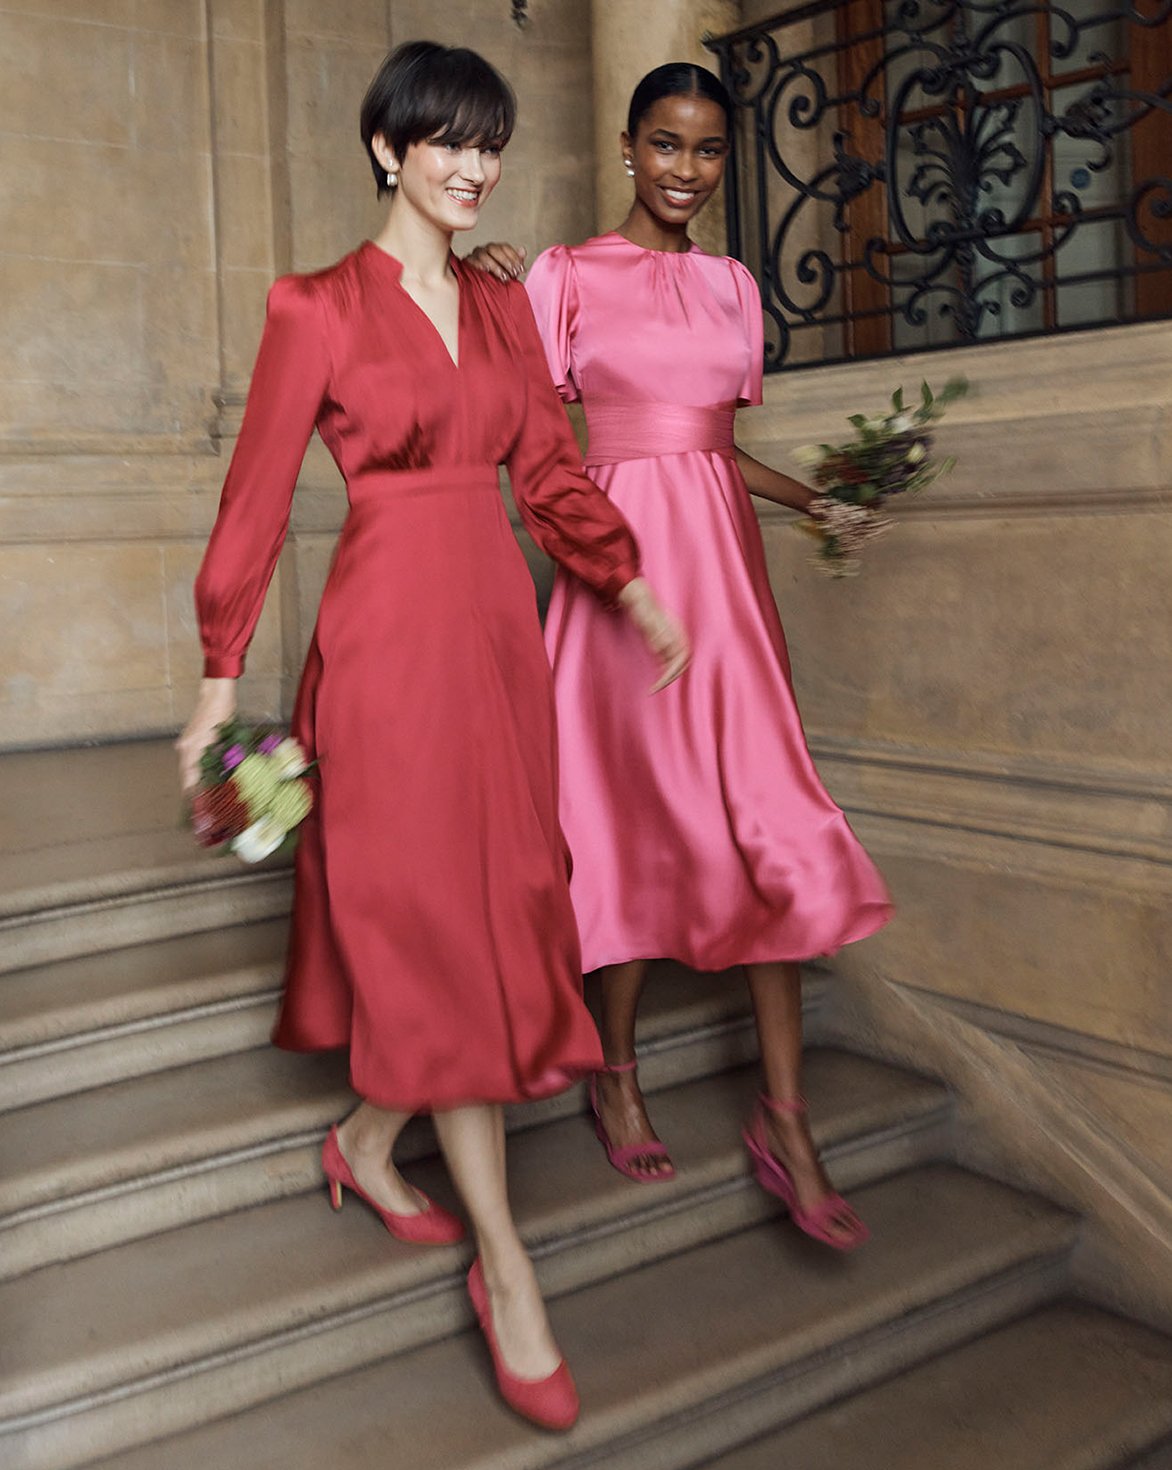 Hobbs models walk down stairs in elegant occasion dresses.